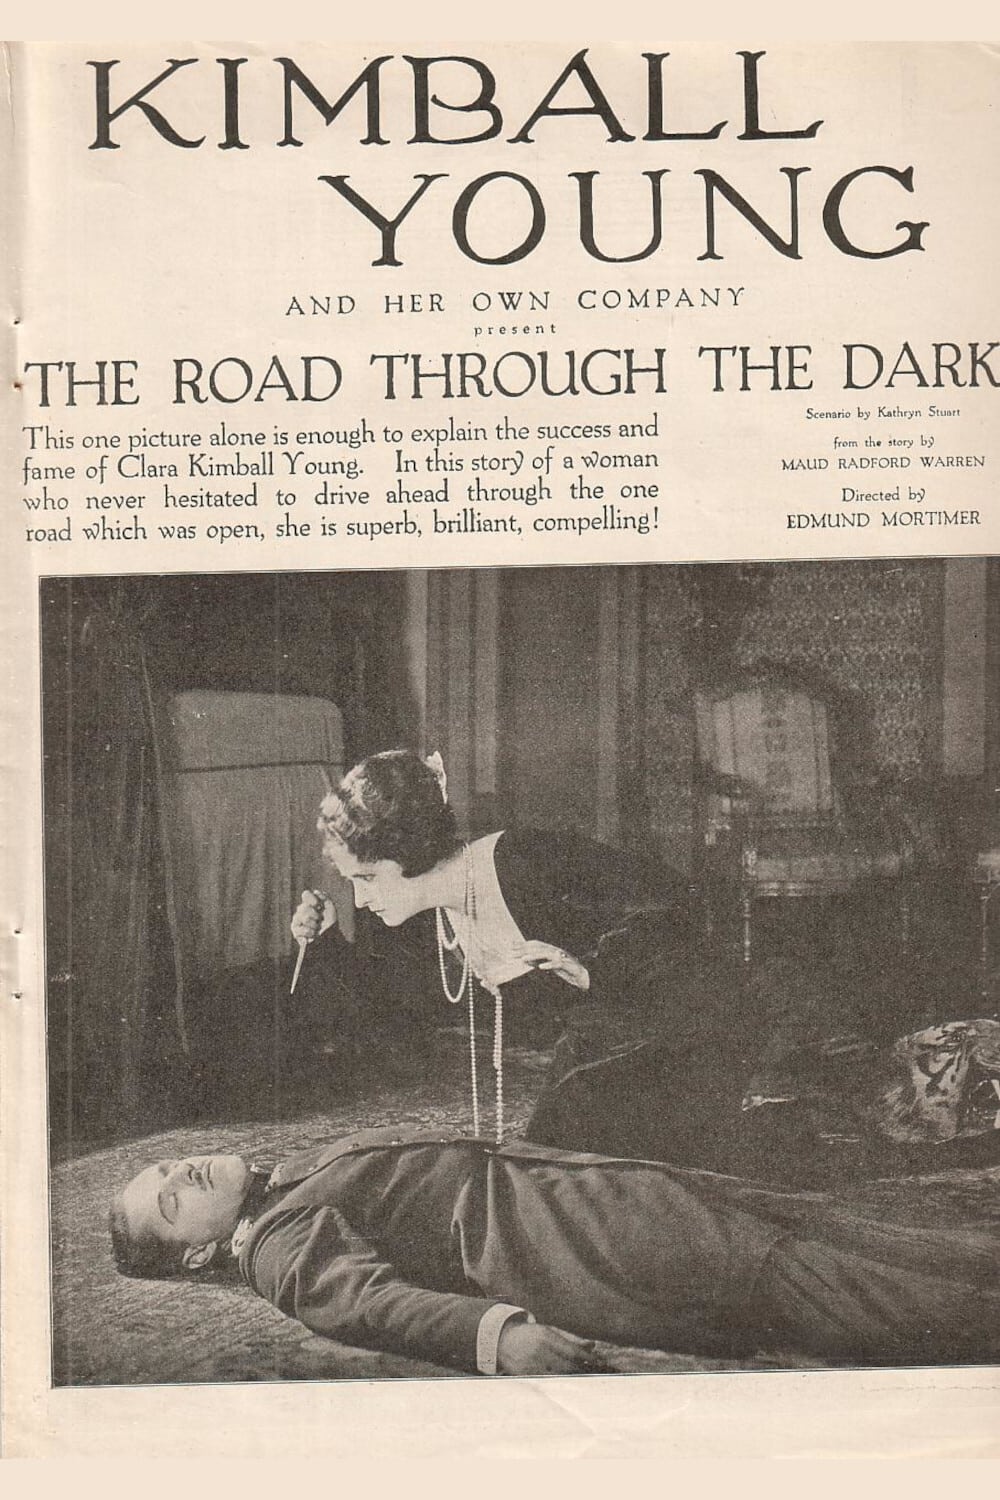 The Road Through the Dark (1918)